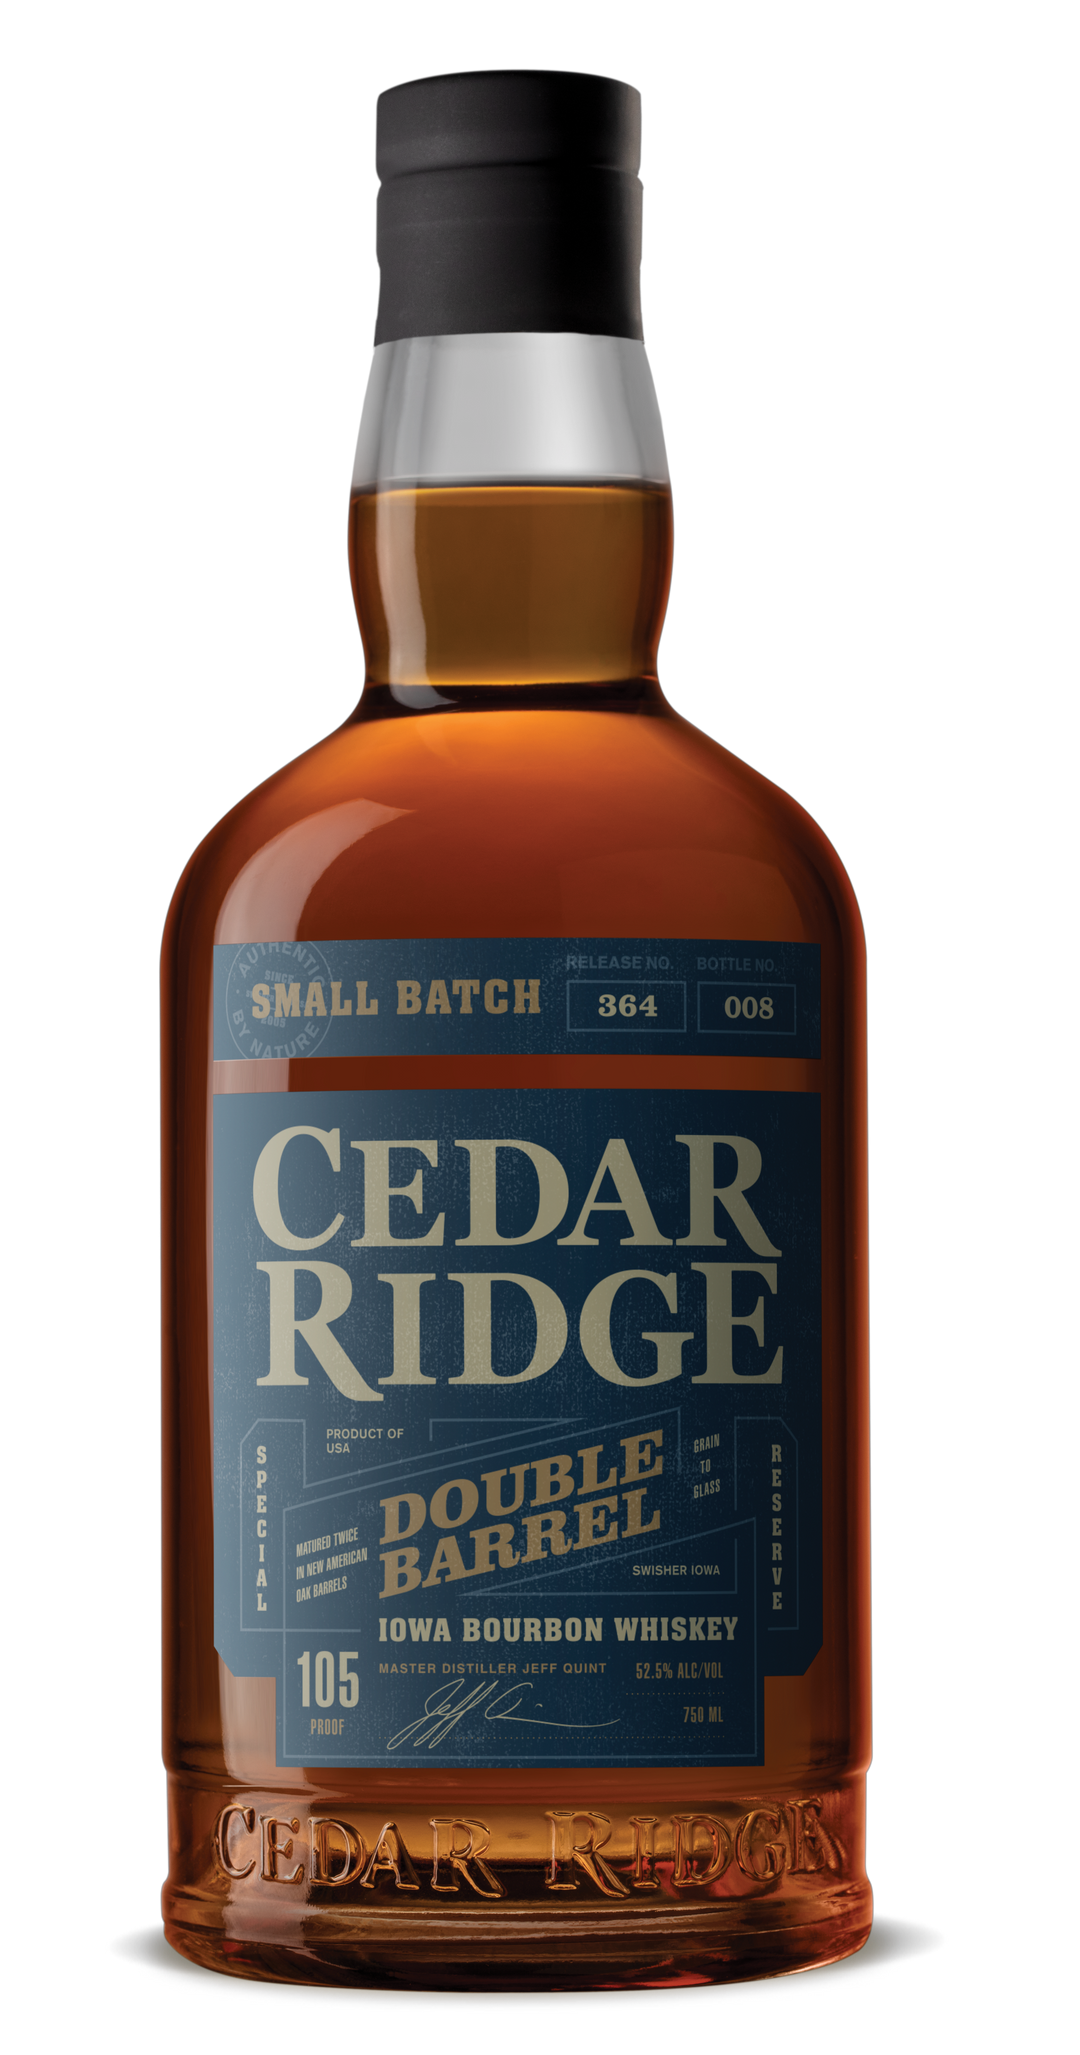 Cedar Ridge Double Barrel Bourbon